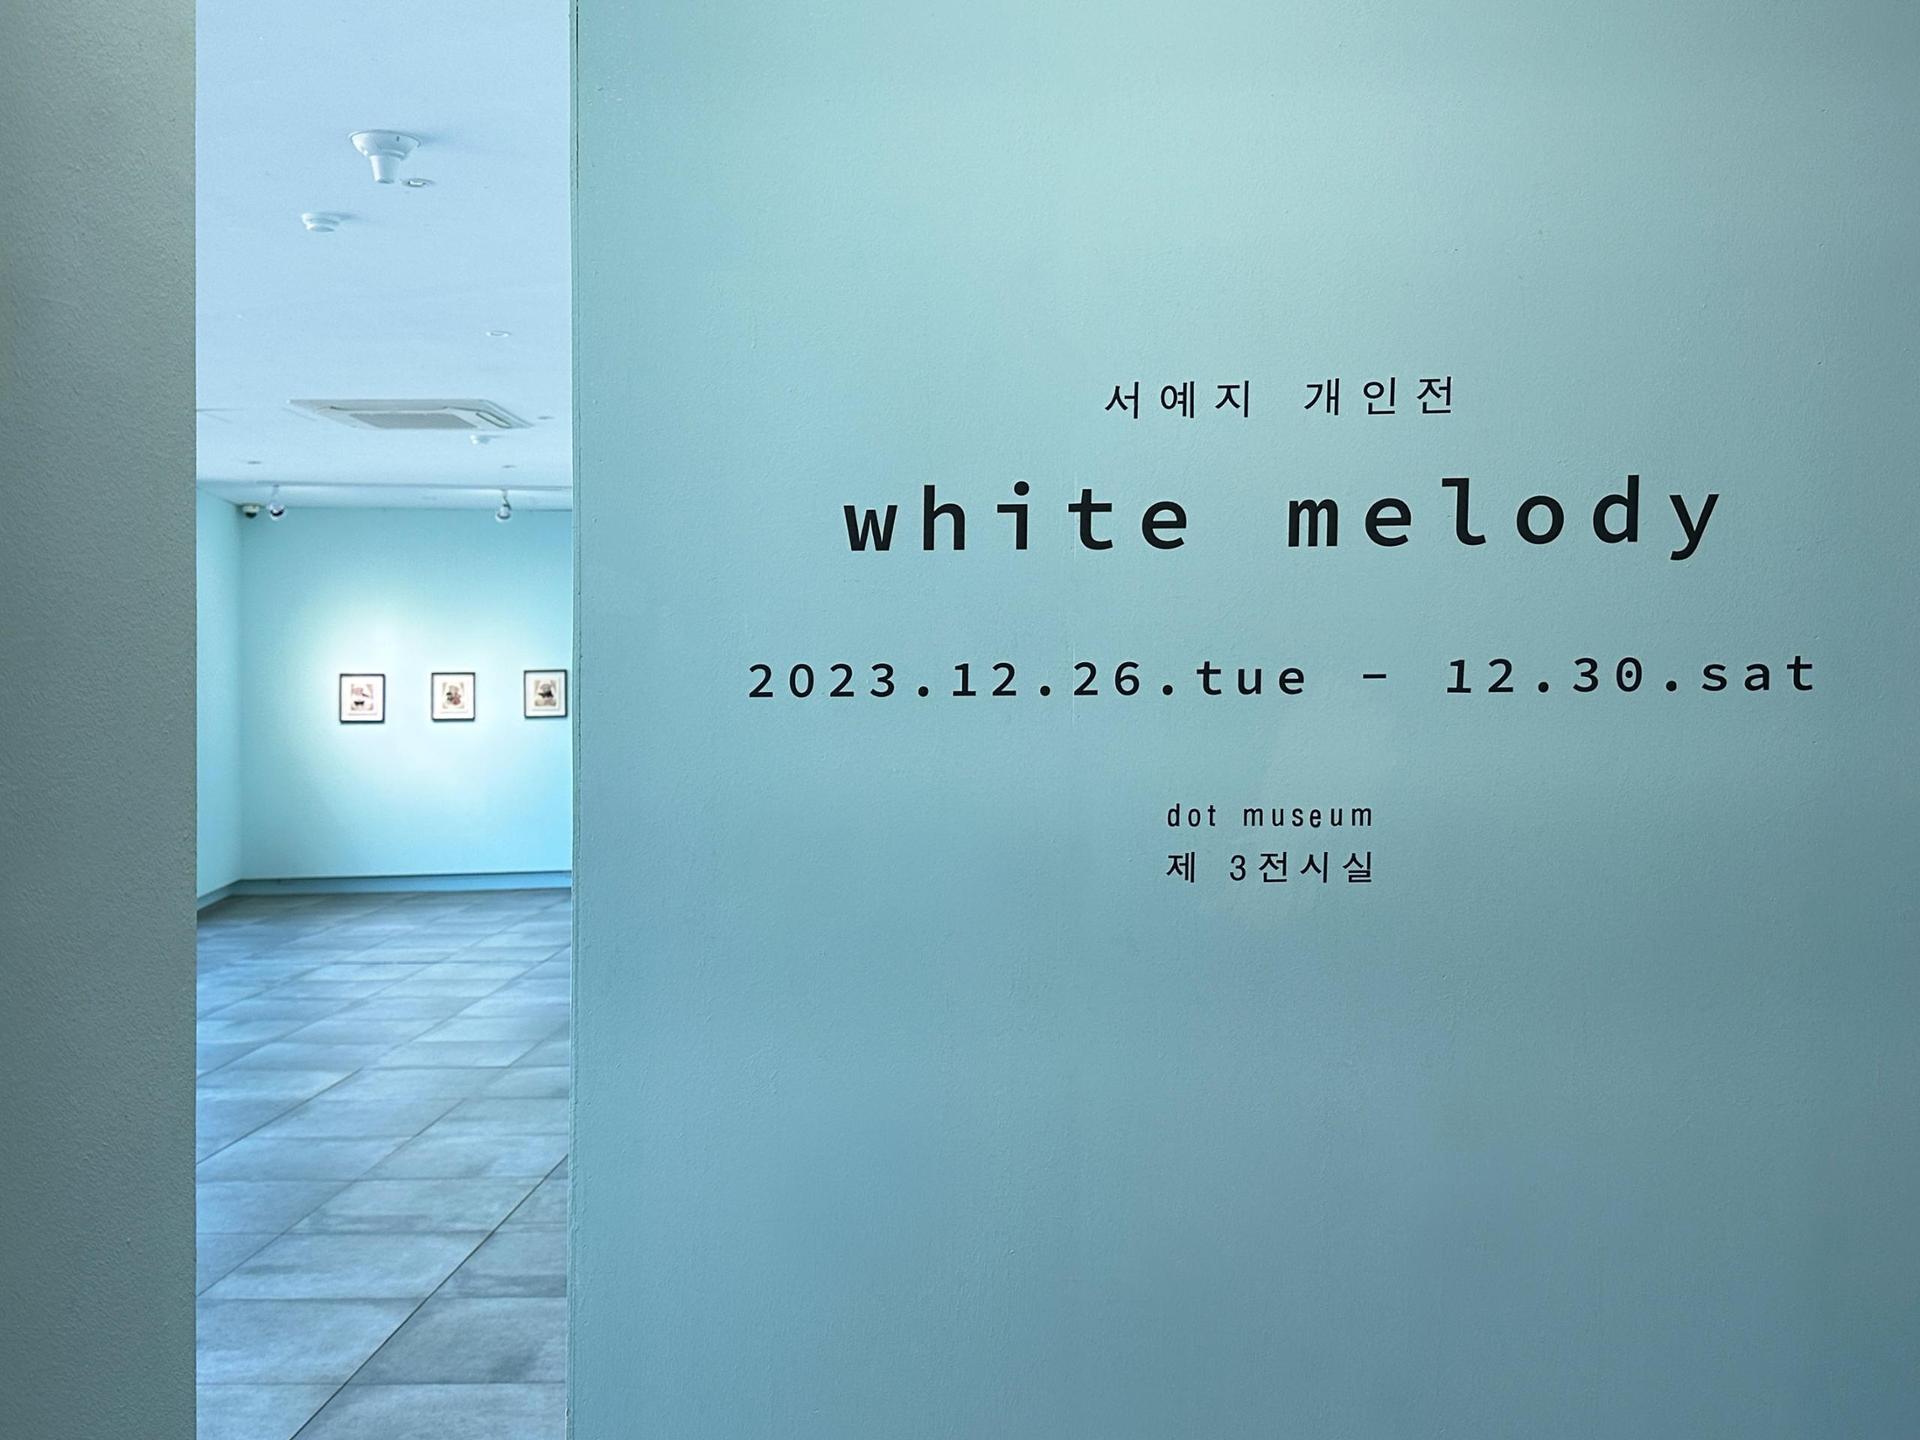 Seo yeji solo exhibition - White melody 